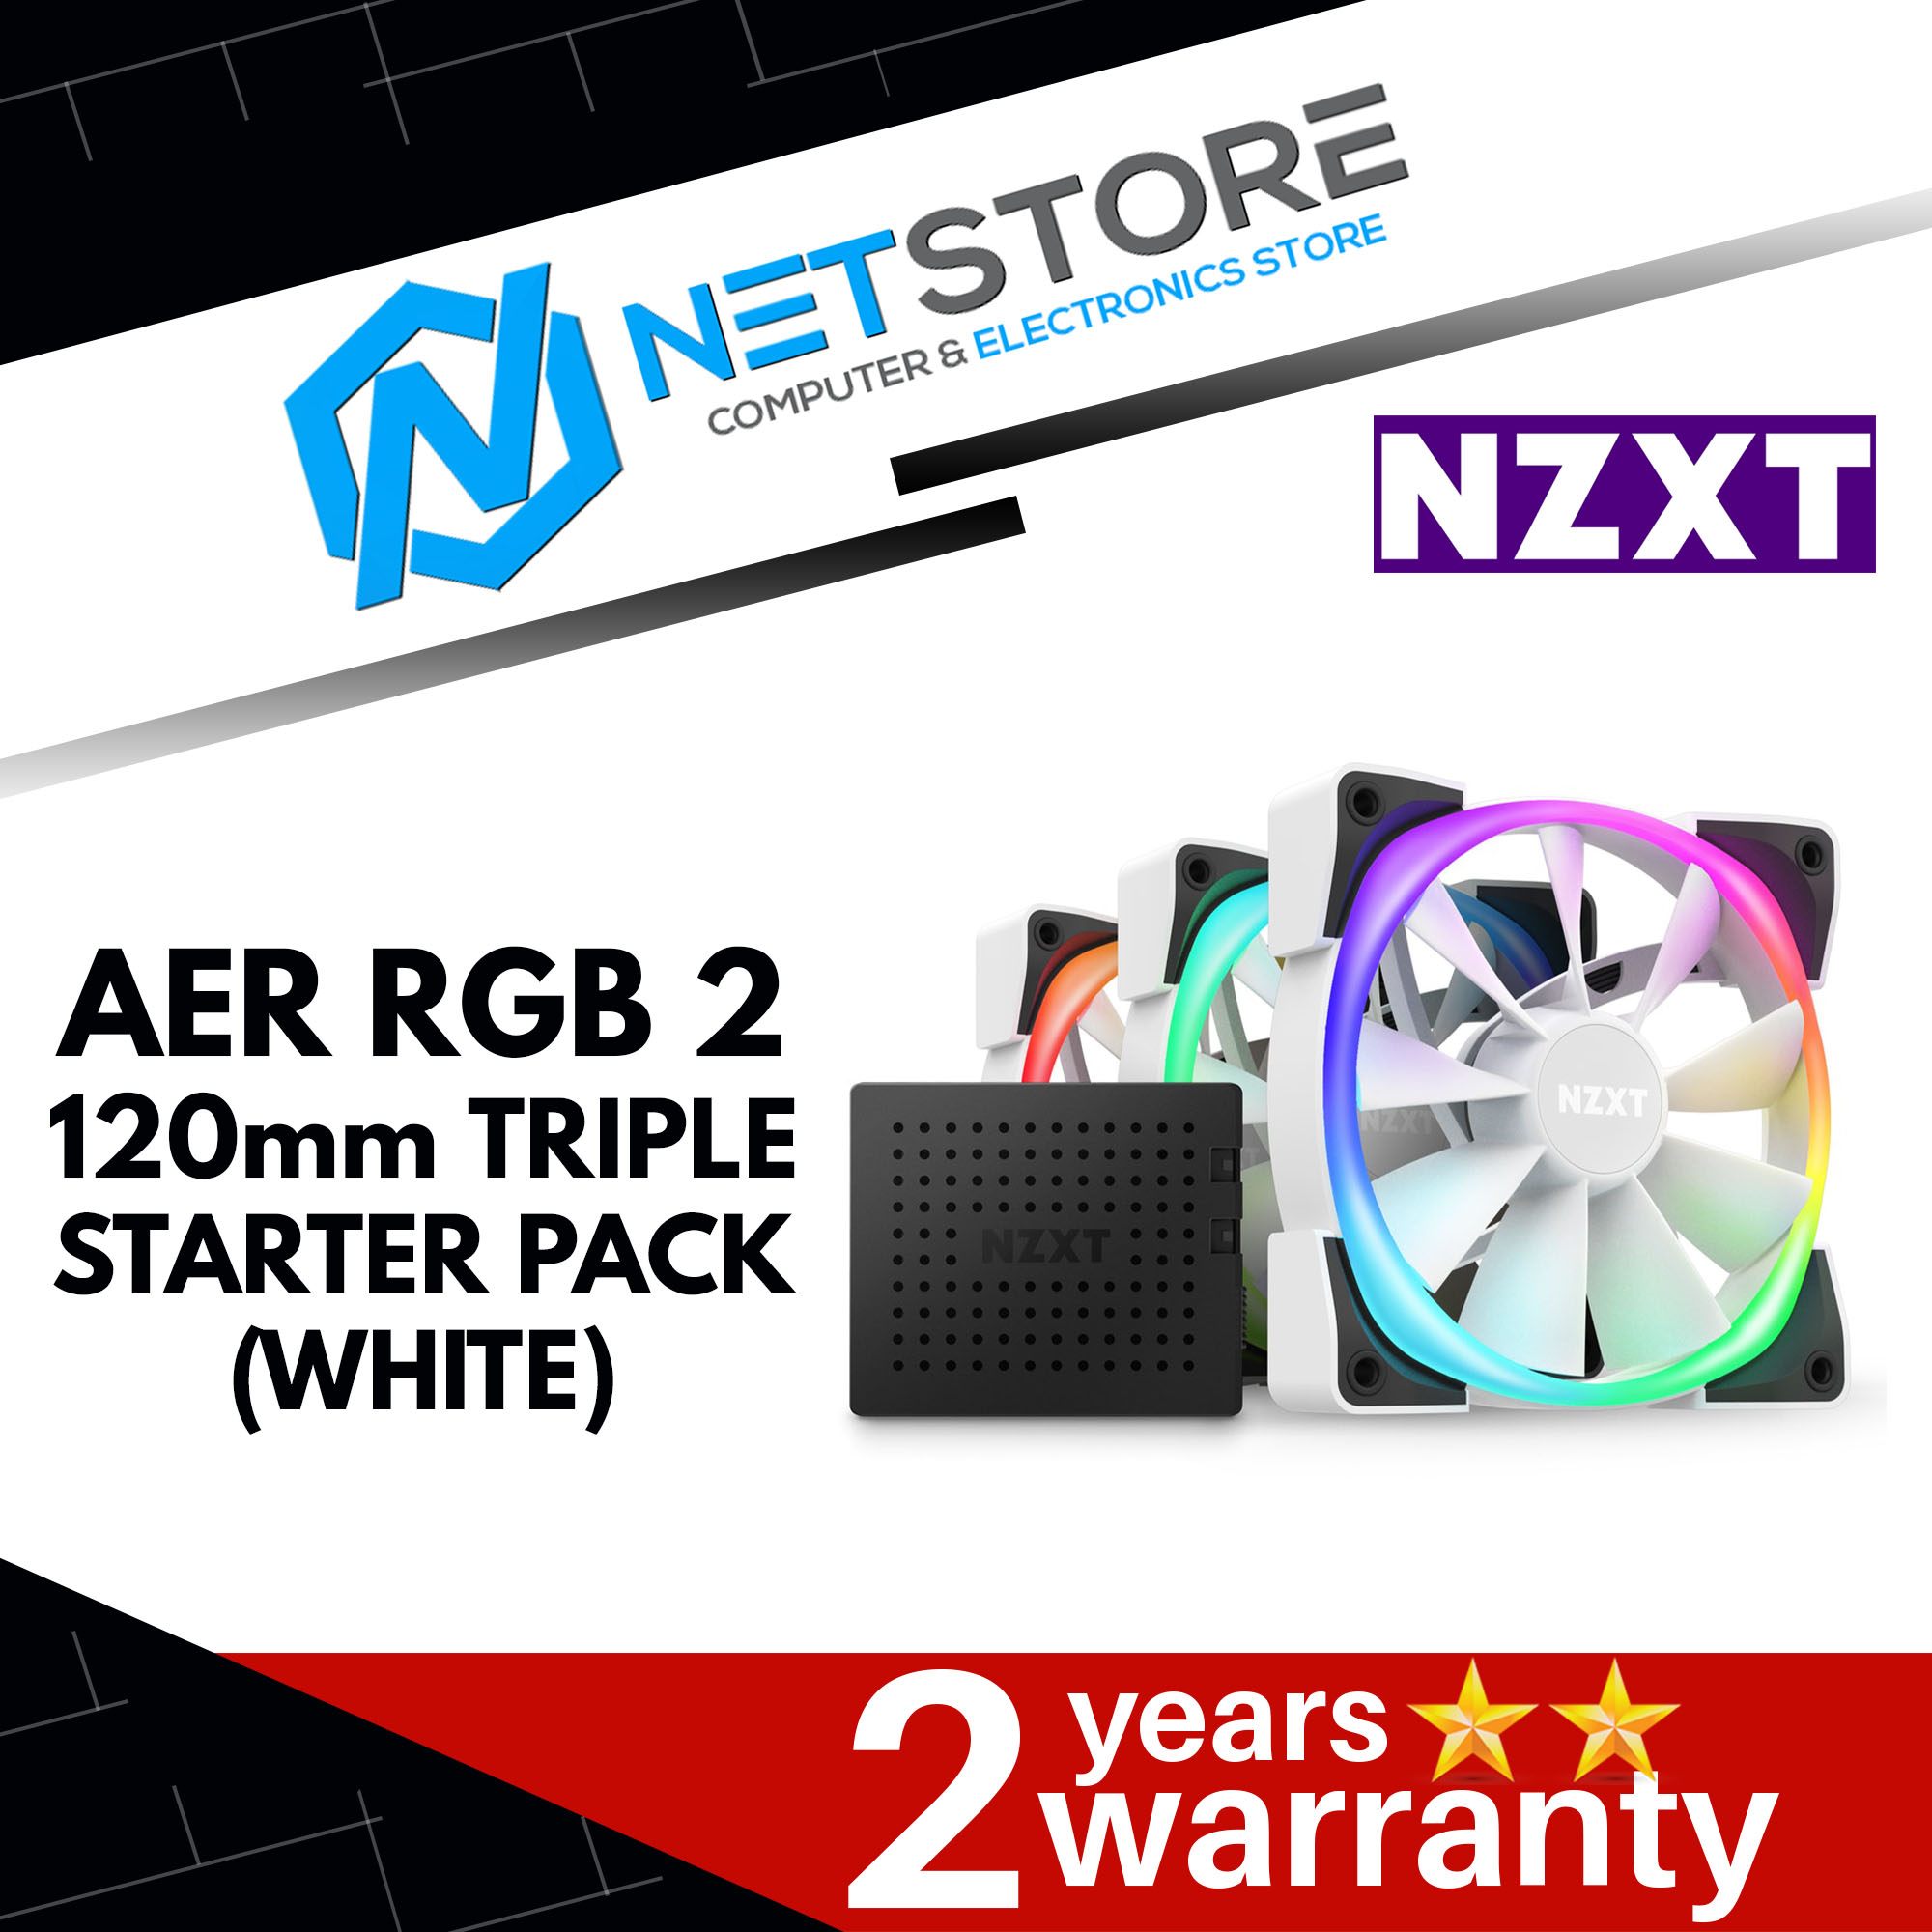 NZXT AER RGB 2 120mm TRIPLE STARTER PACK (WHITE) - HF-2812C-TW